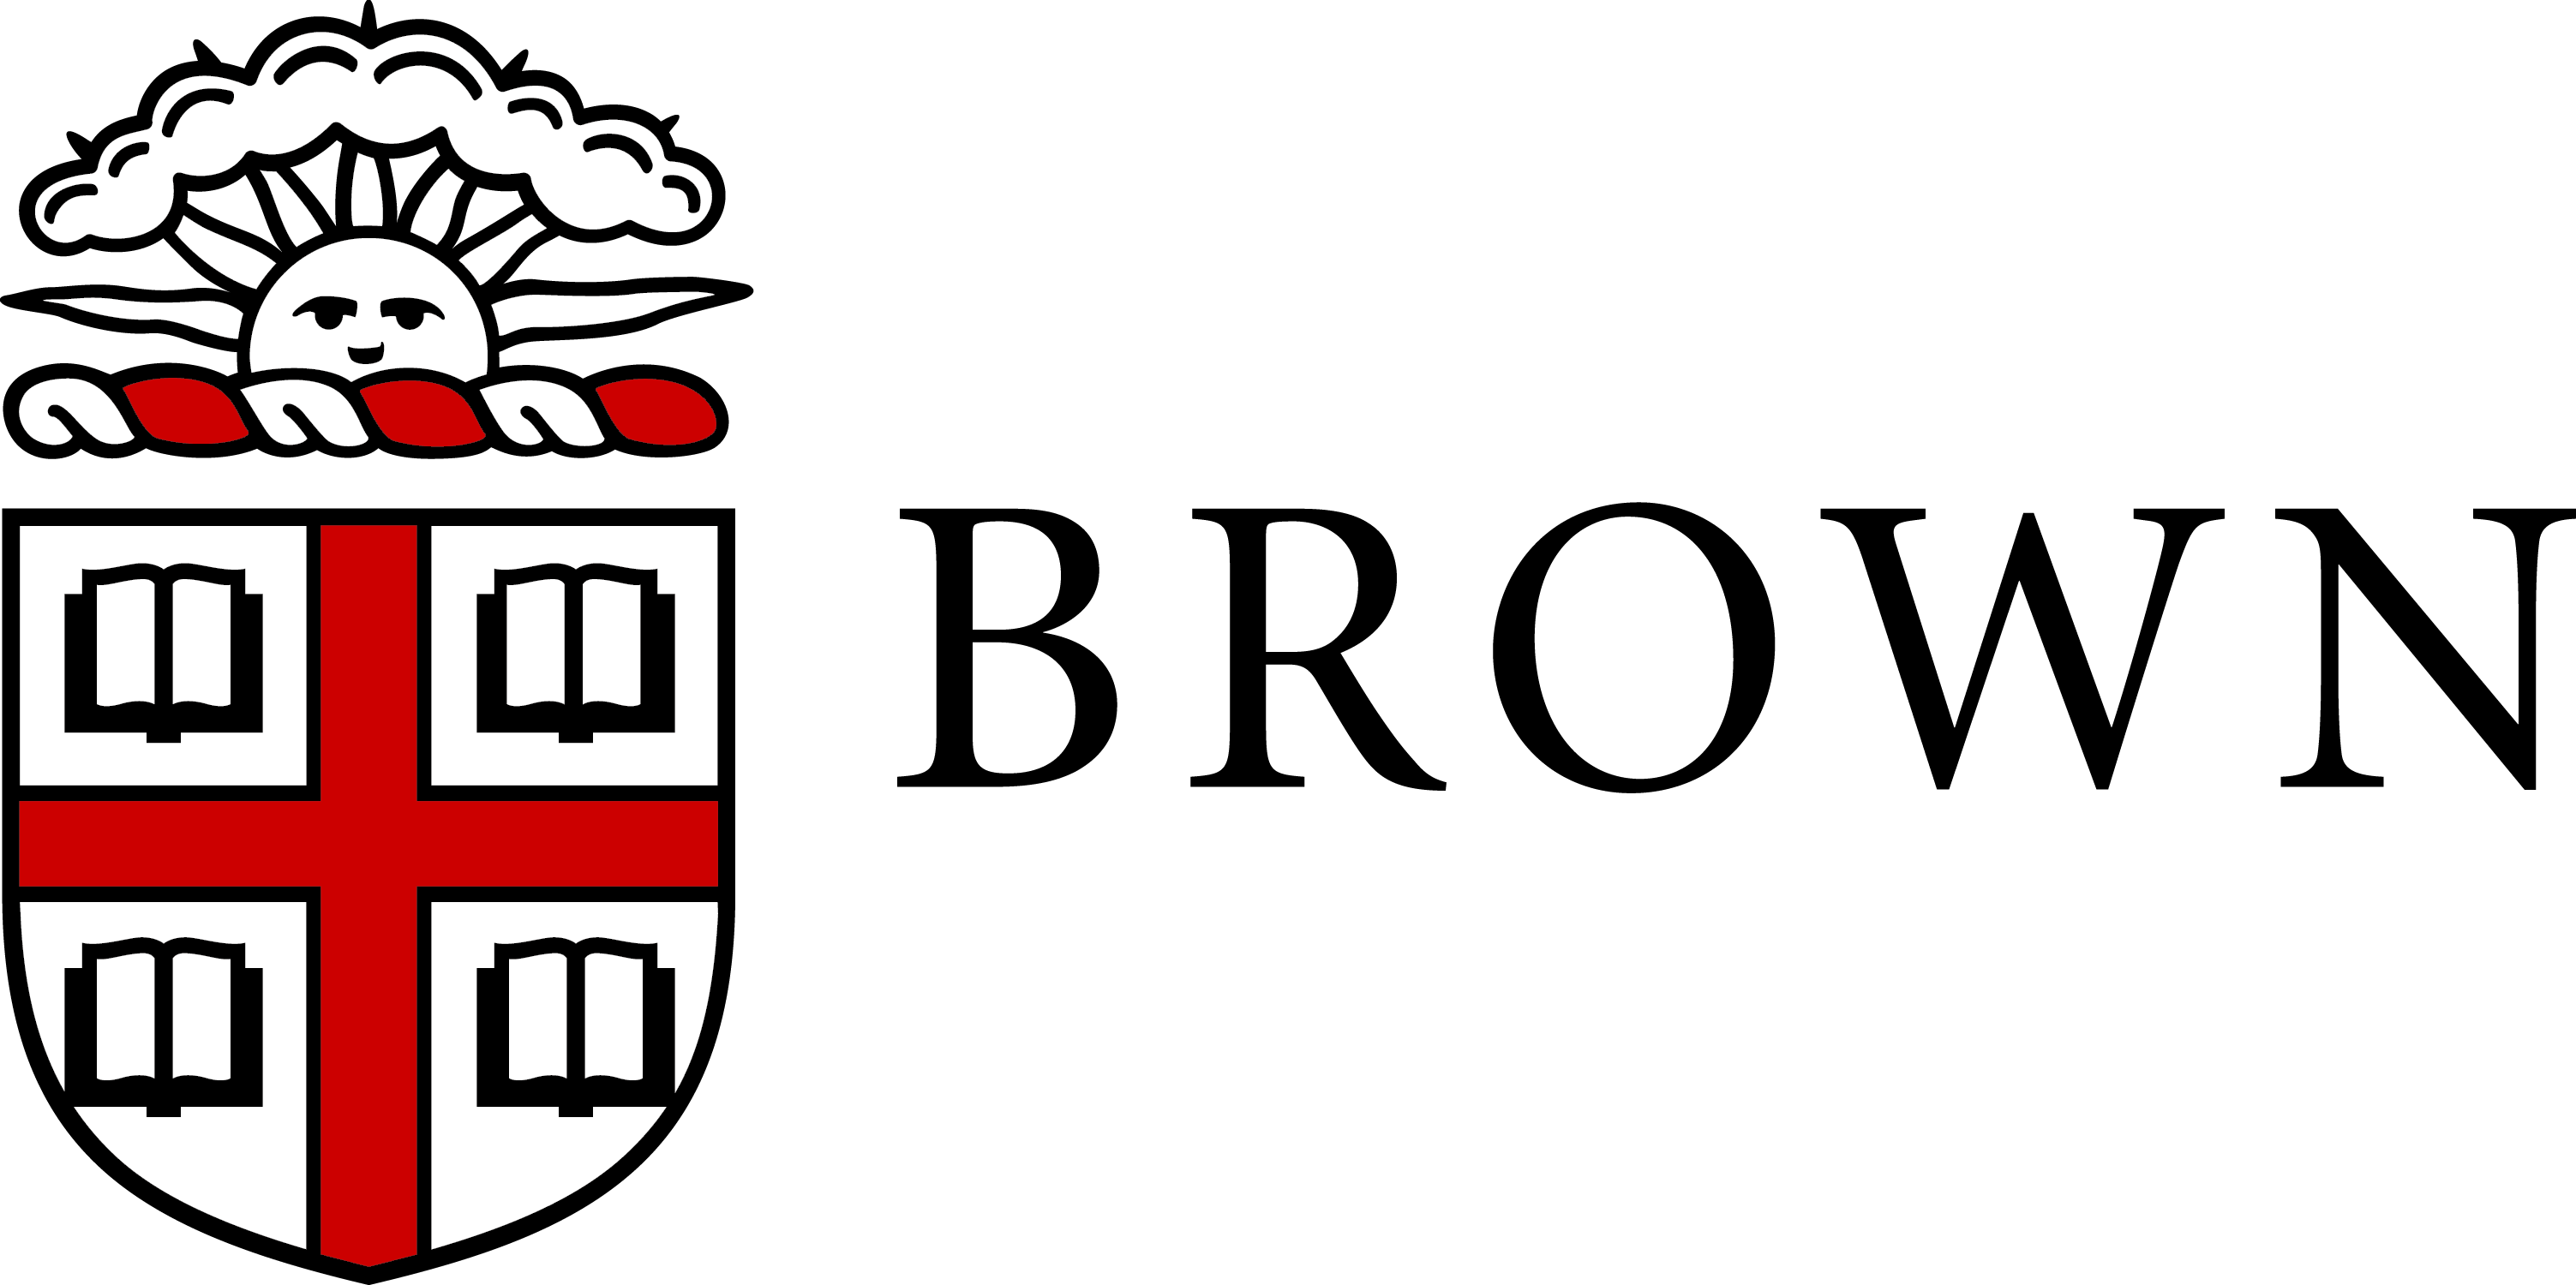 Brown University logo.